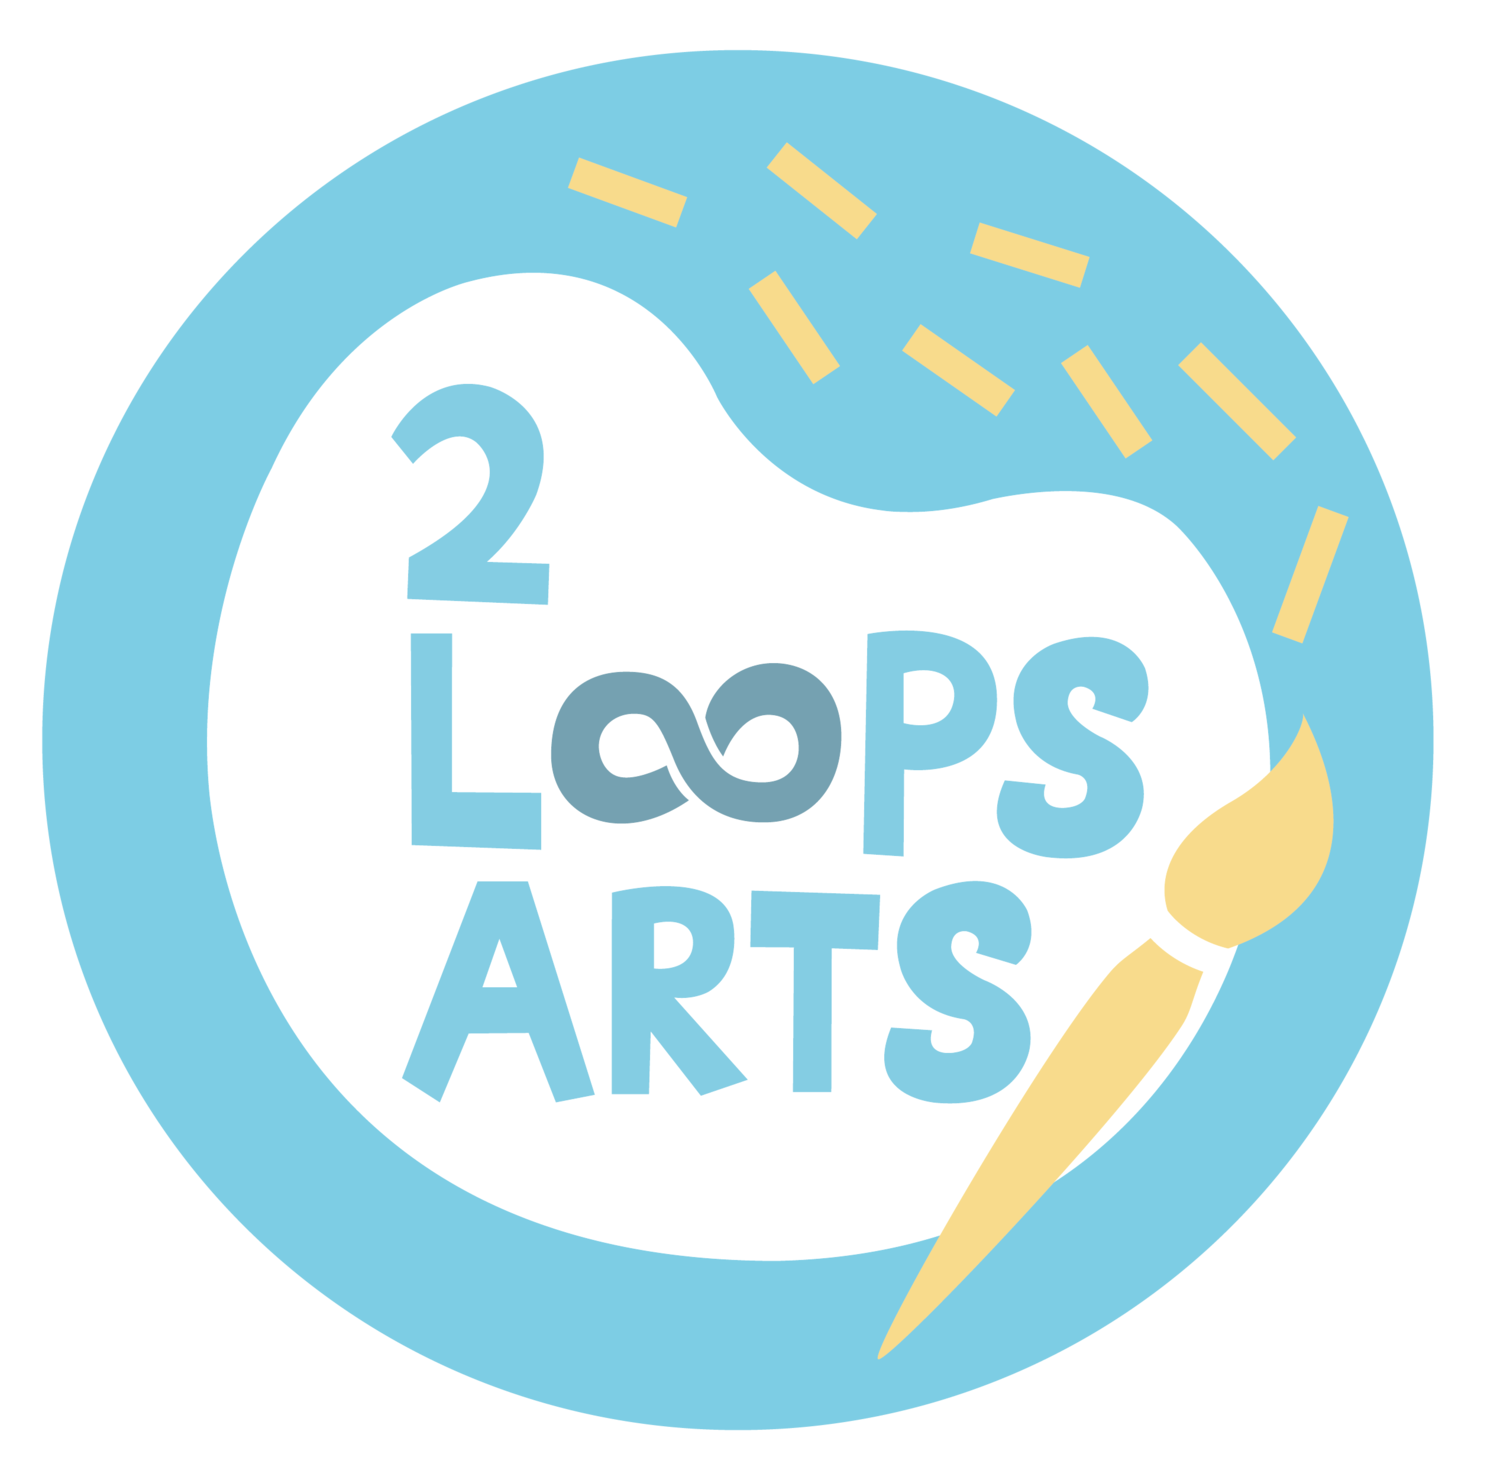 2 Loops Arts